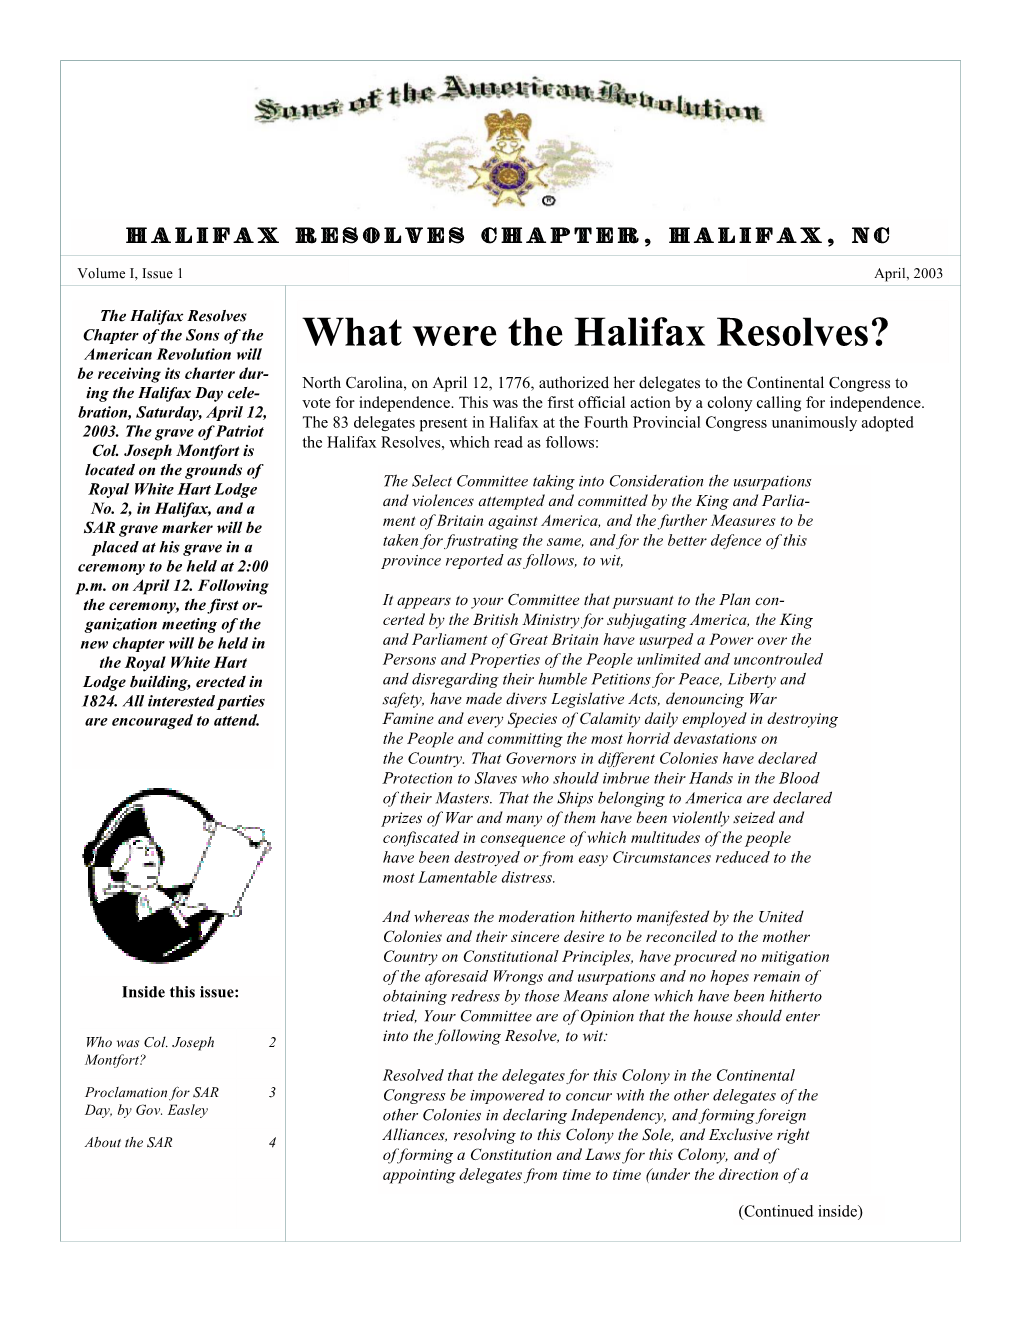 The Halifax Resolves